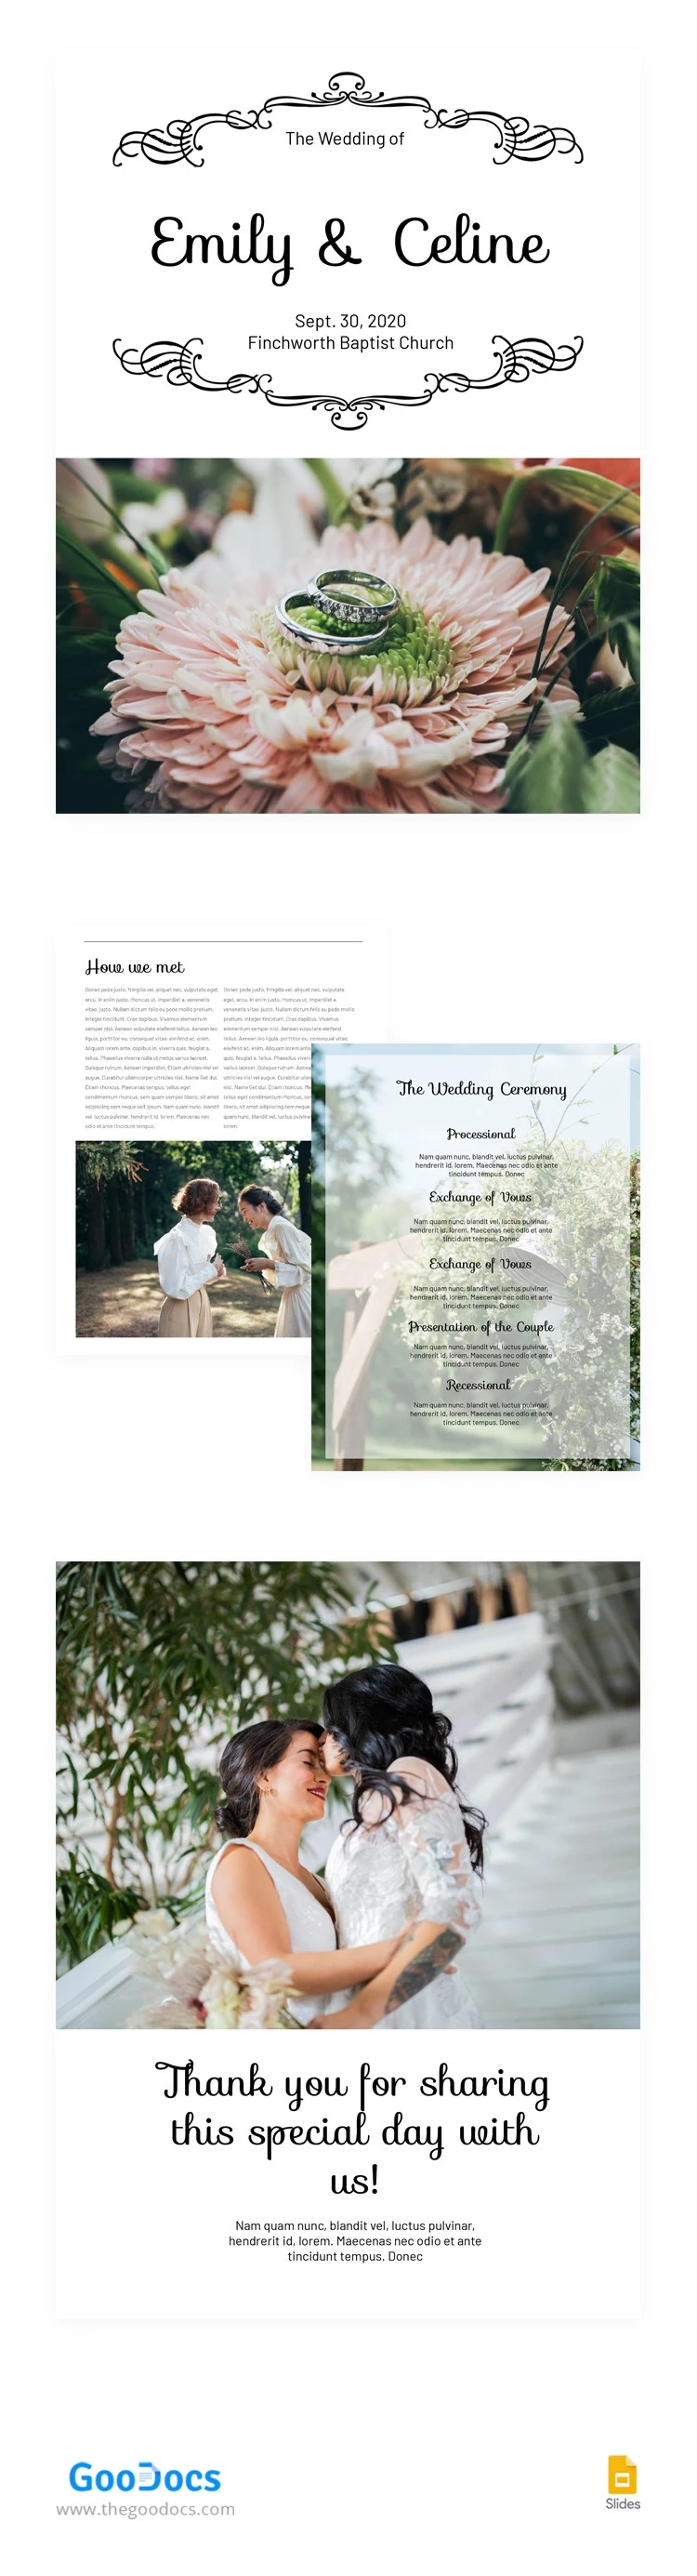 Sweet Wedding Booklet - free Google Docs Template - 10063558